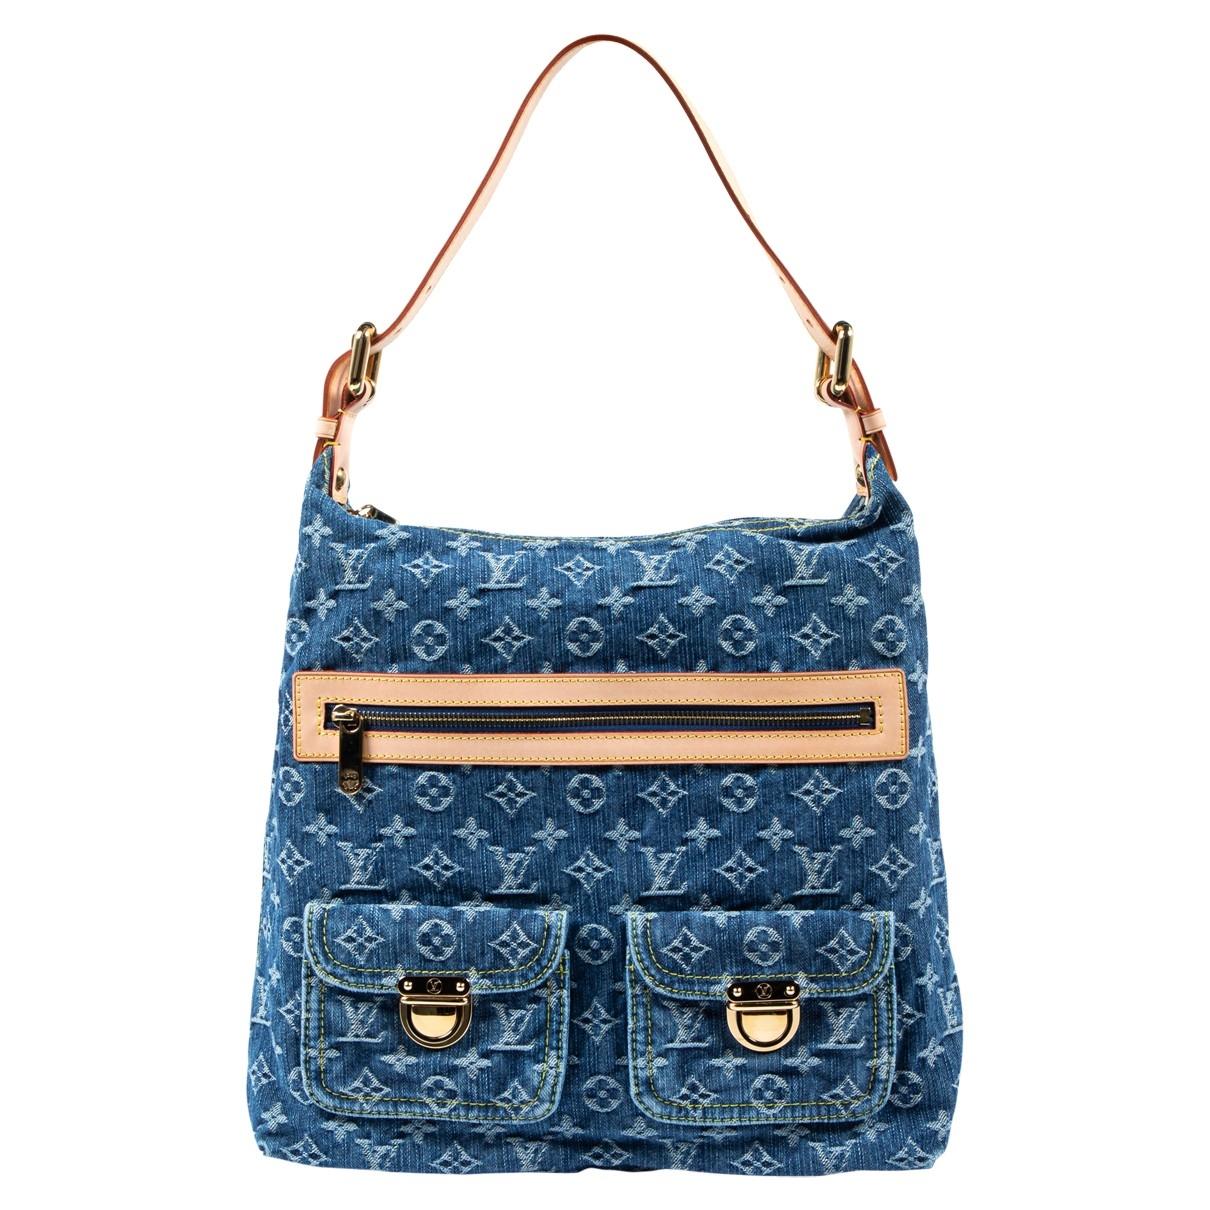 Louis Vuitton Baggy Bag in Blue - Lyst